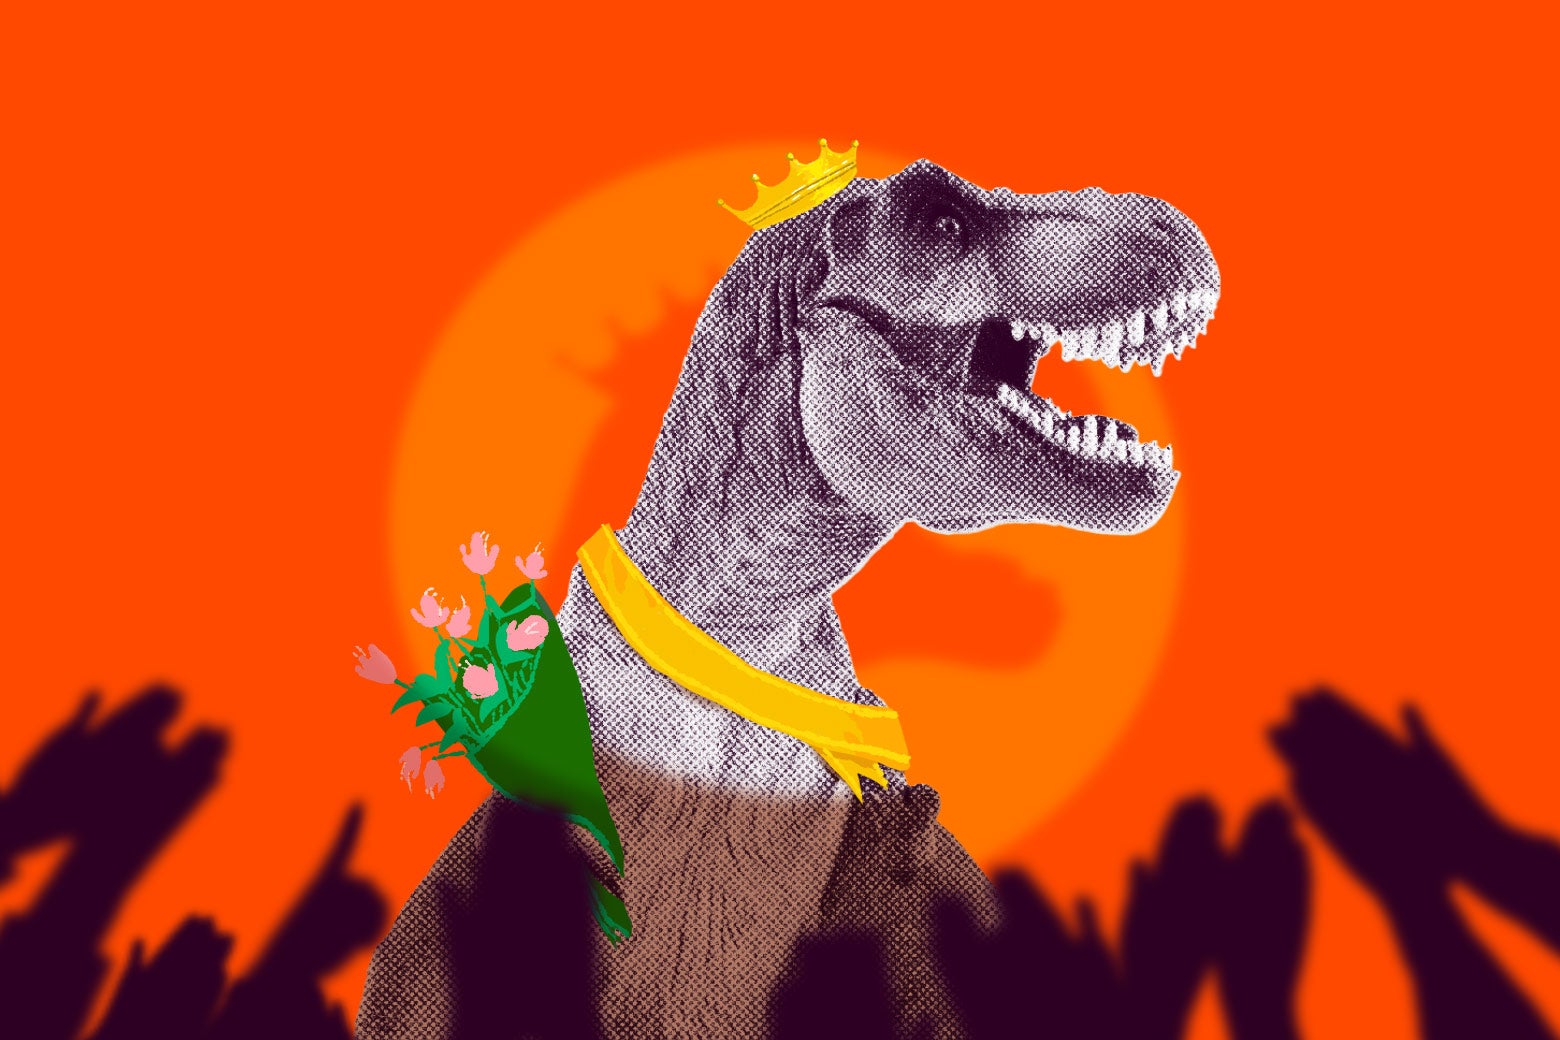 Tyrannosaurus Rex doesn't deserve quite so much attention.